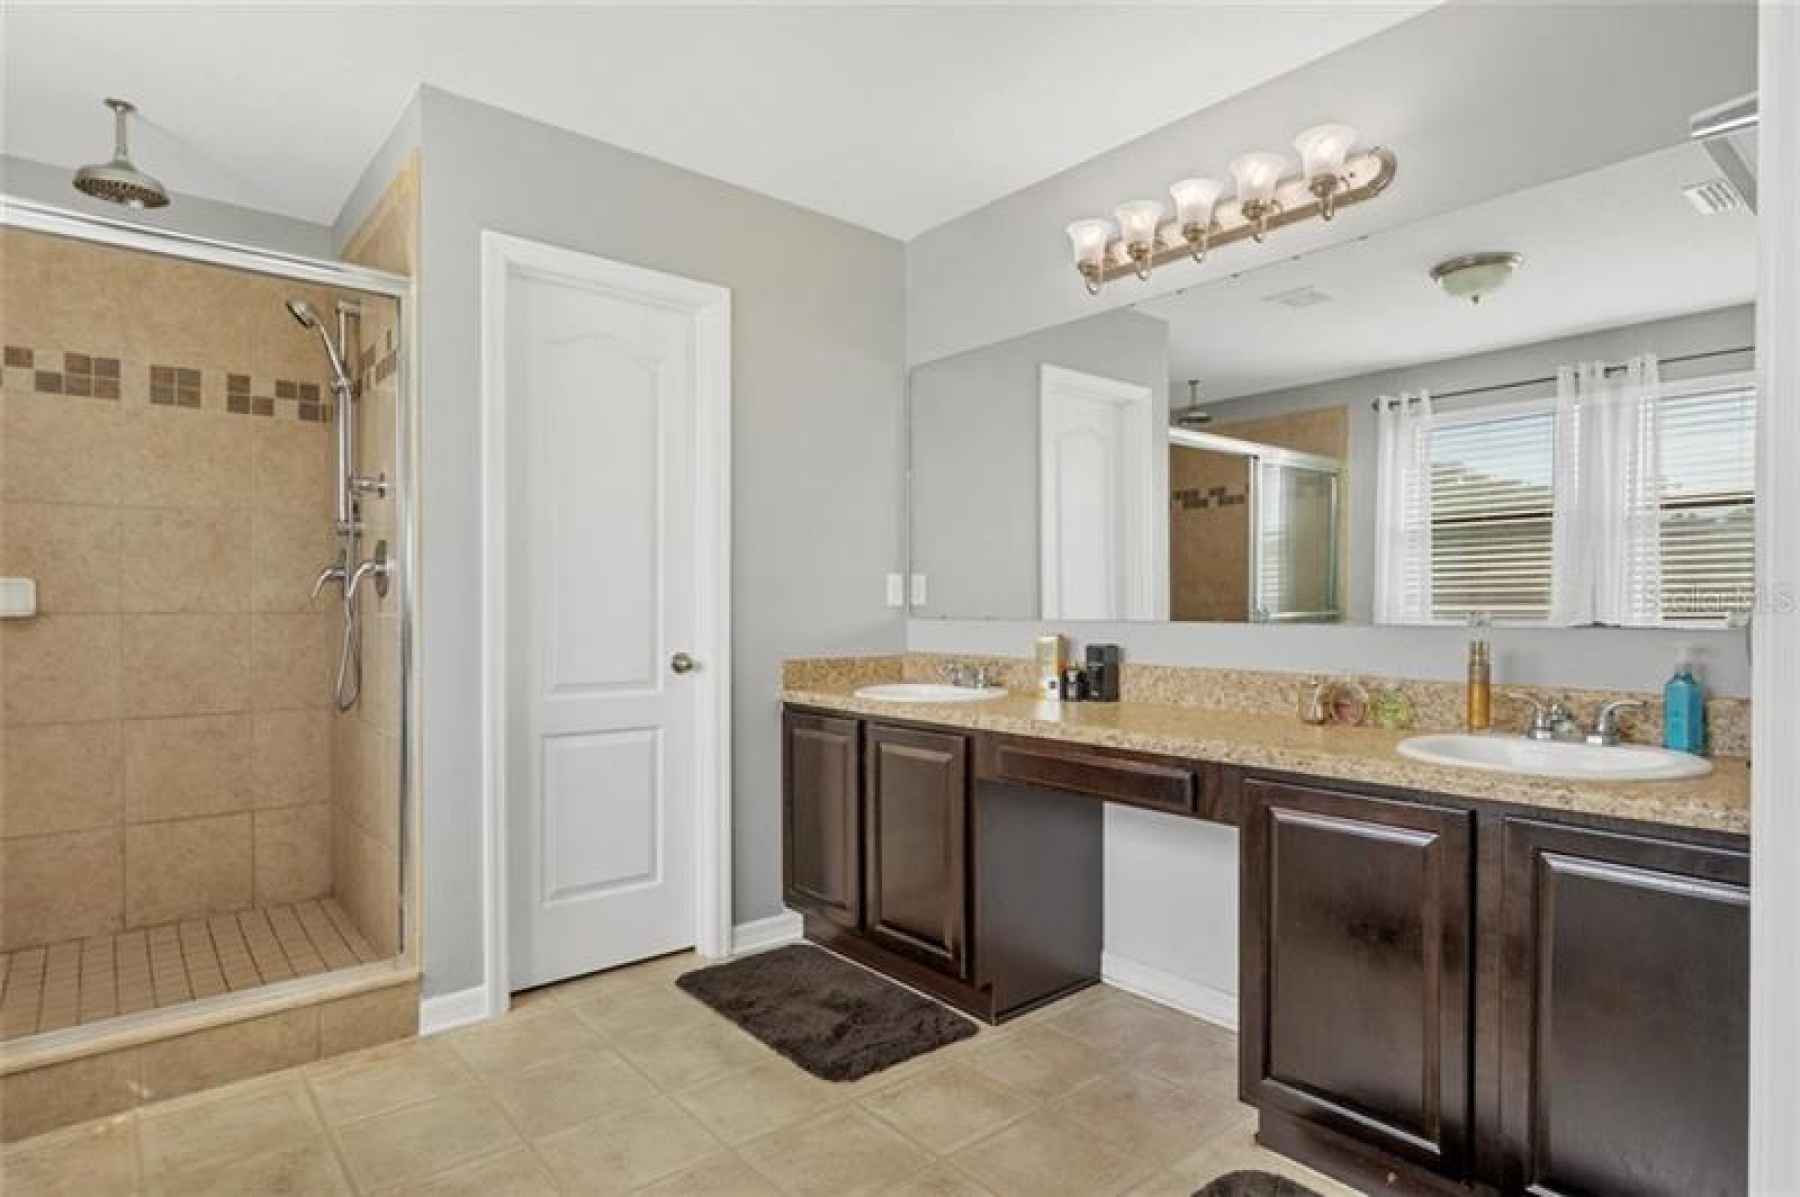 Owner's retreat en suite bath with dual sinks & shower.